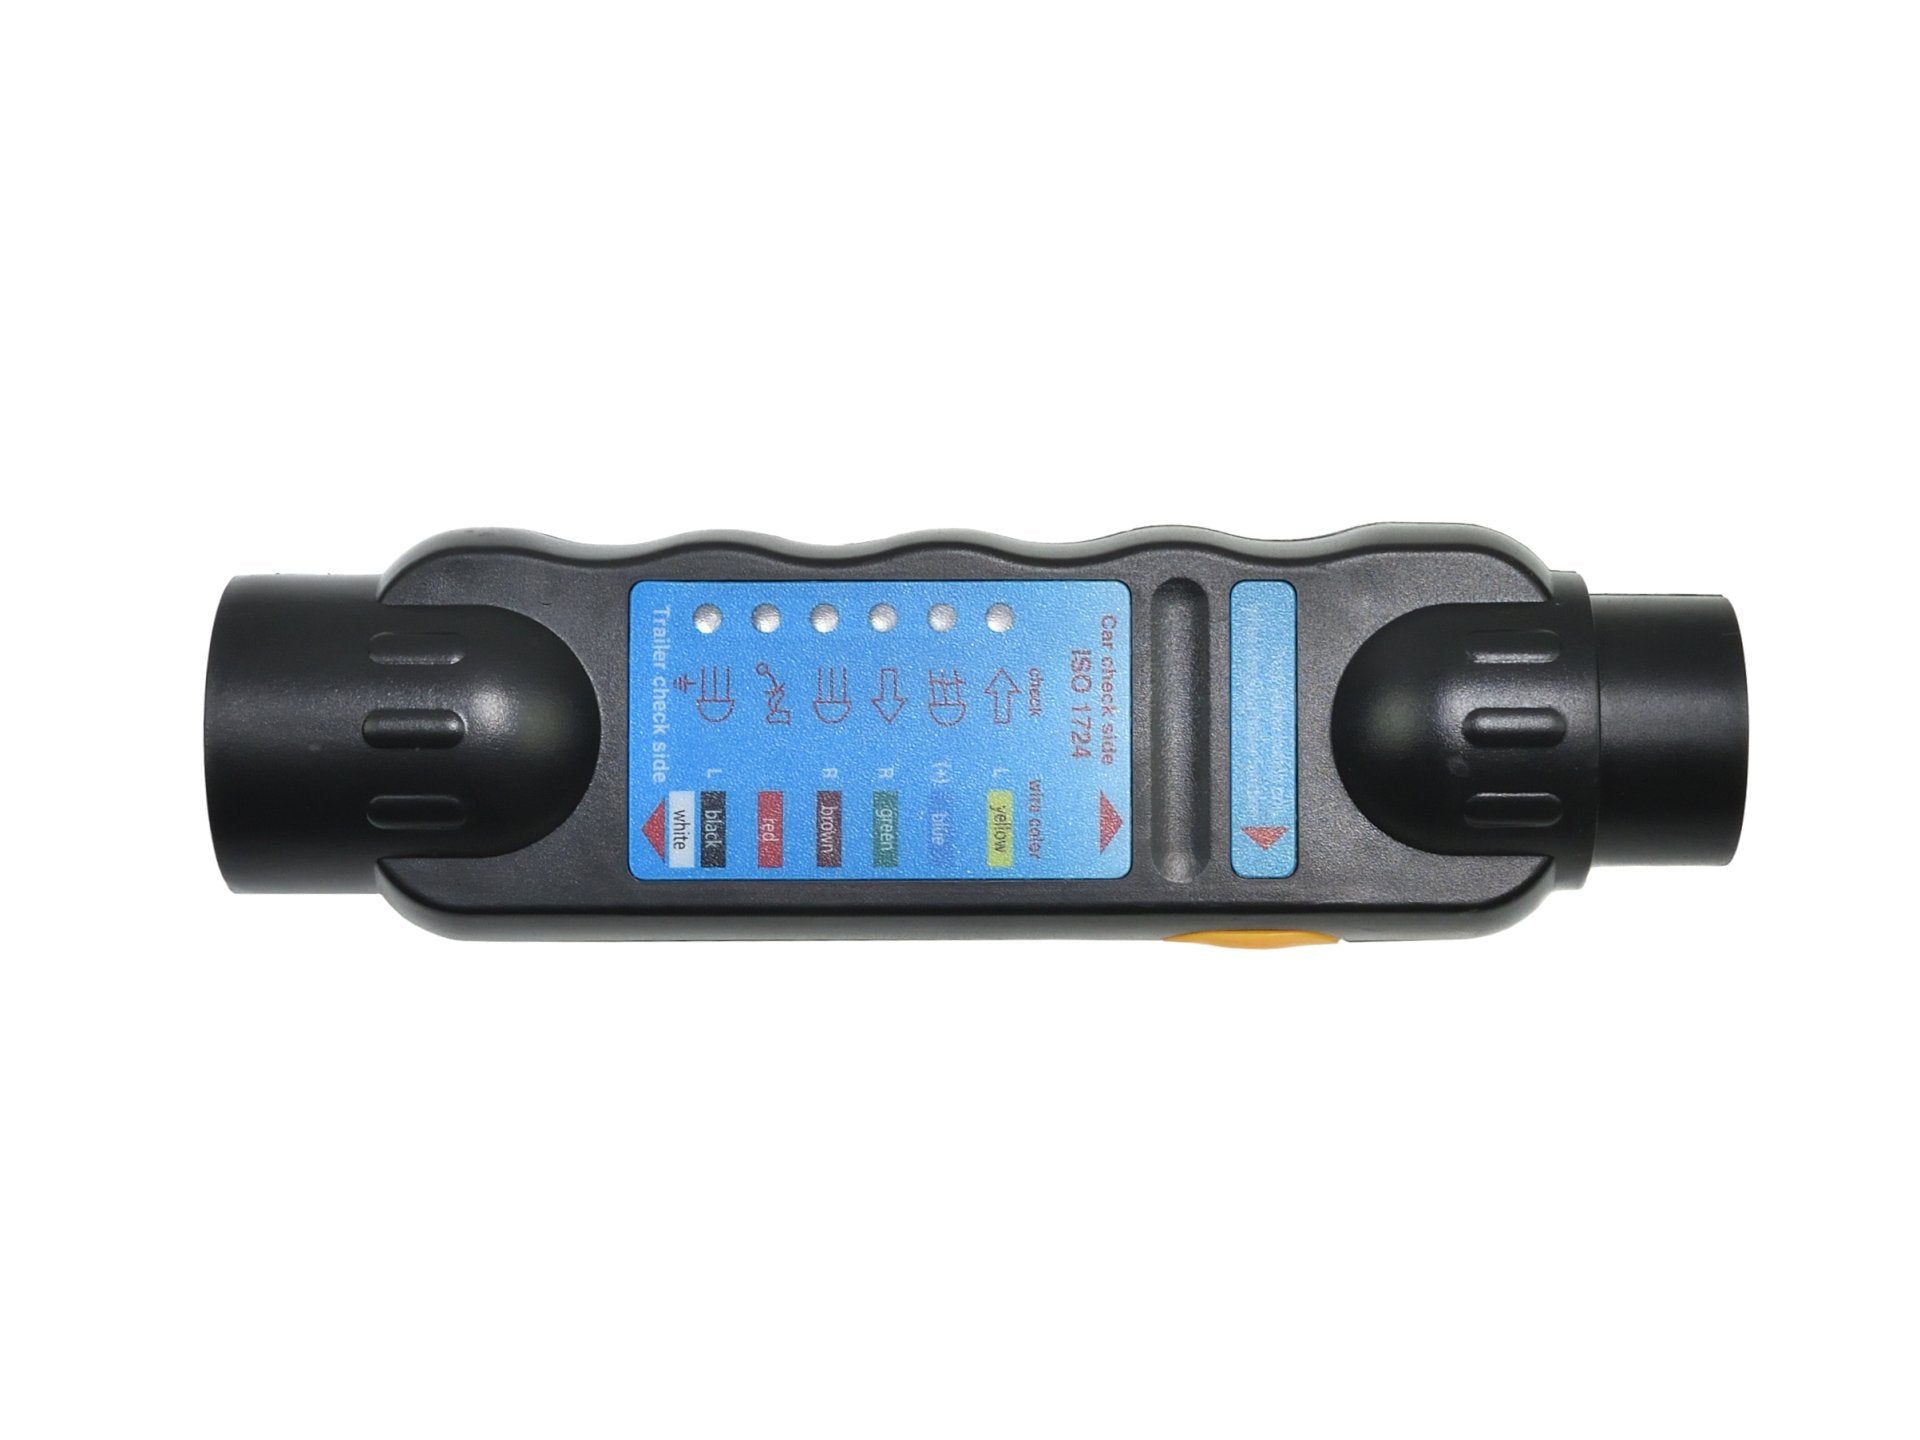 Kfz-Anhänger-Beleuchtungstester mit Adaptern, 12-V-Stecker und Steckdose, 7–13-polig – SPO-CS-deaktiviert – SPO-Standard – SPO-DI